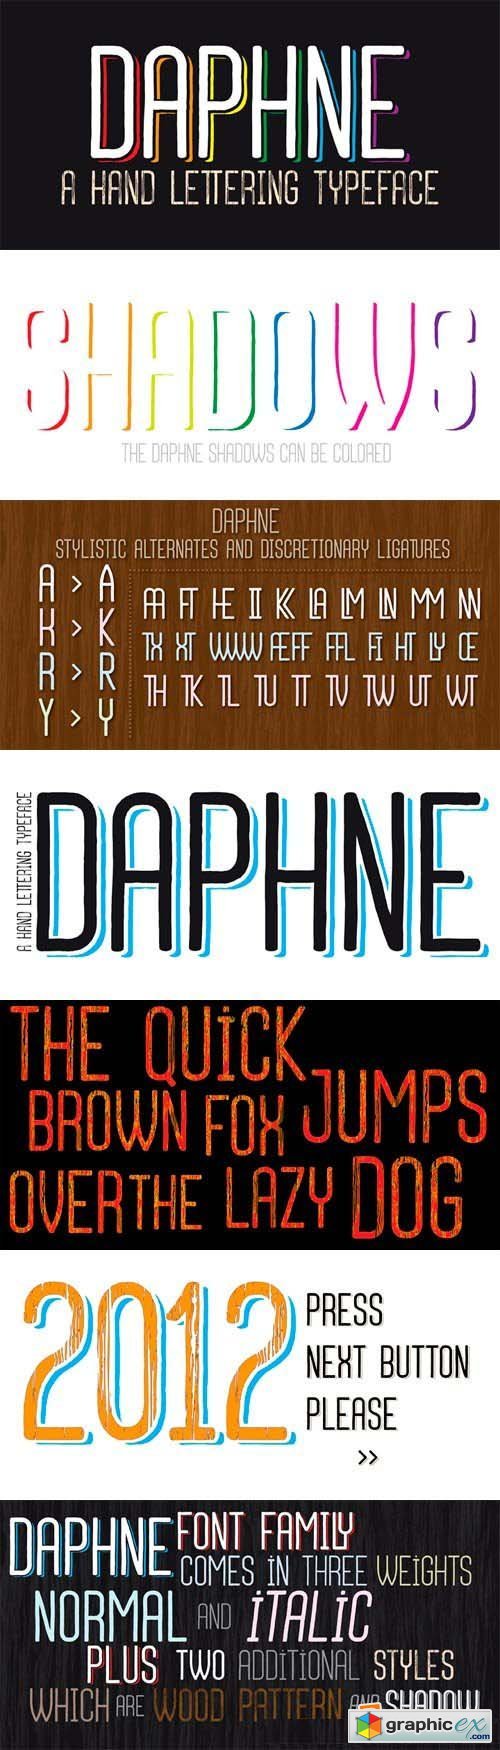 Daphne Font Family - 12 Fonts for $100